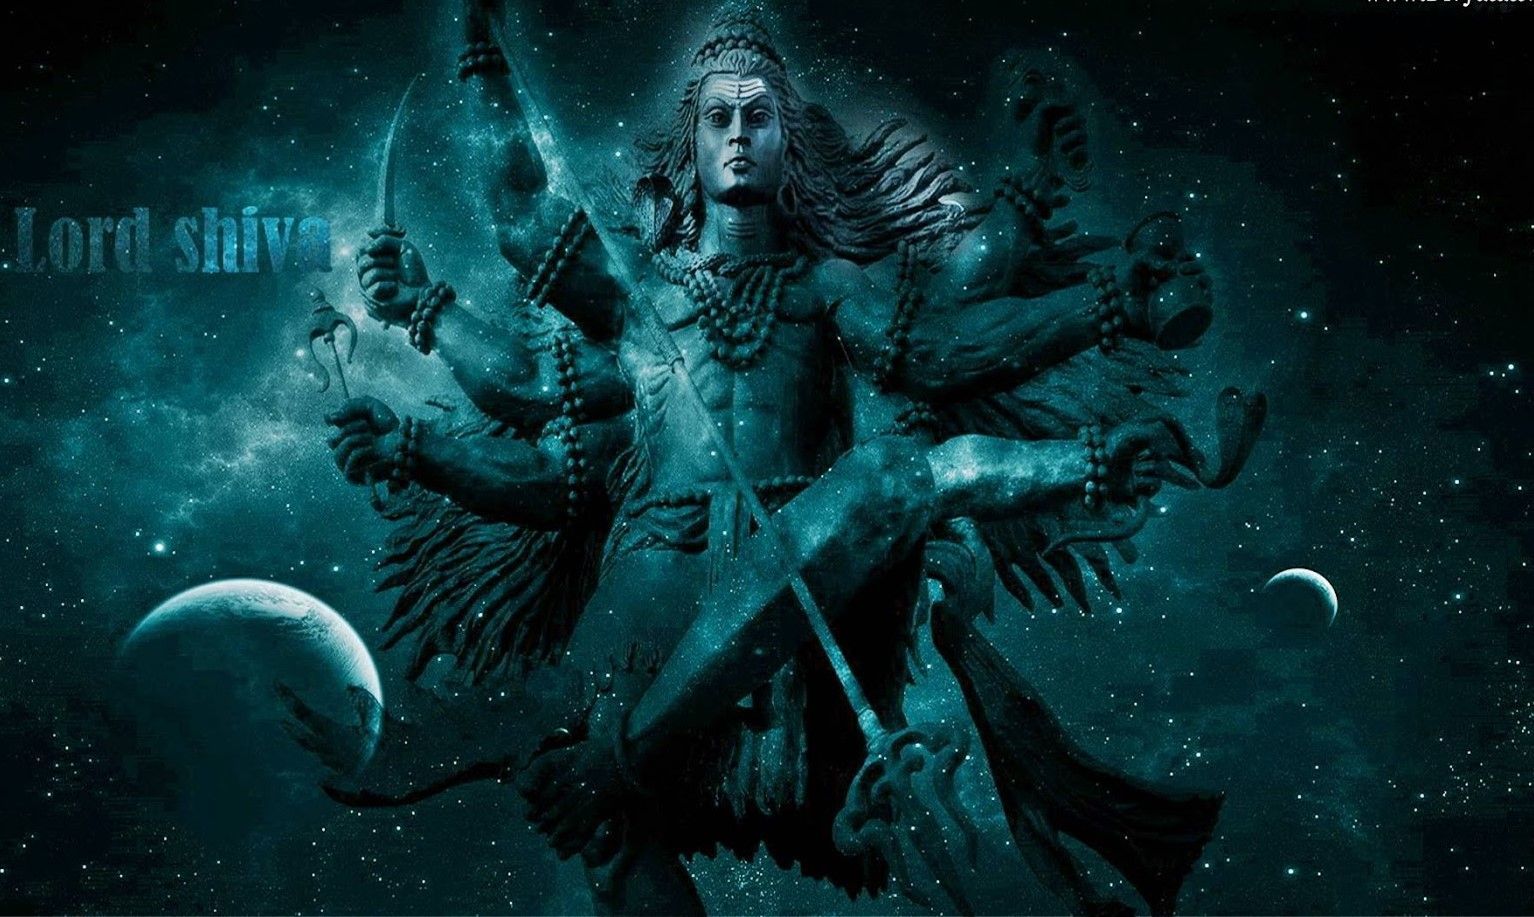 Lord Shiva is the father of Yoga, Meditation, Spirituality